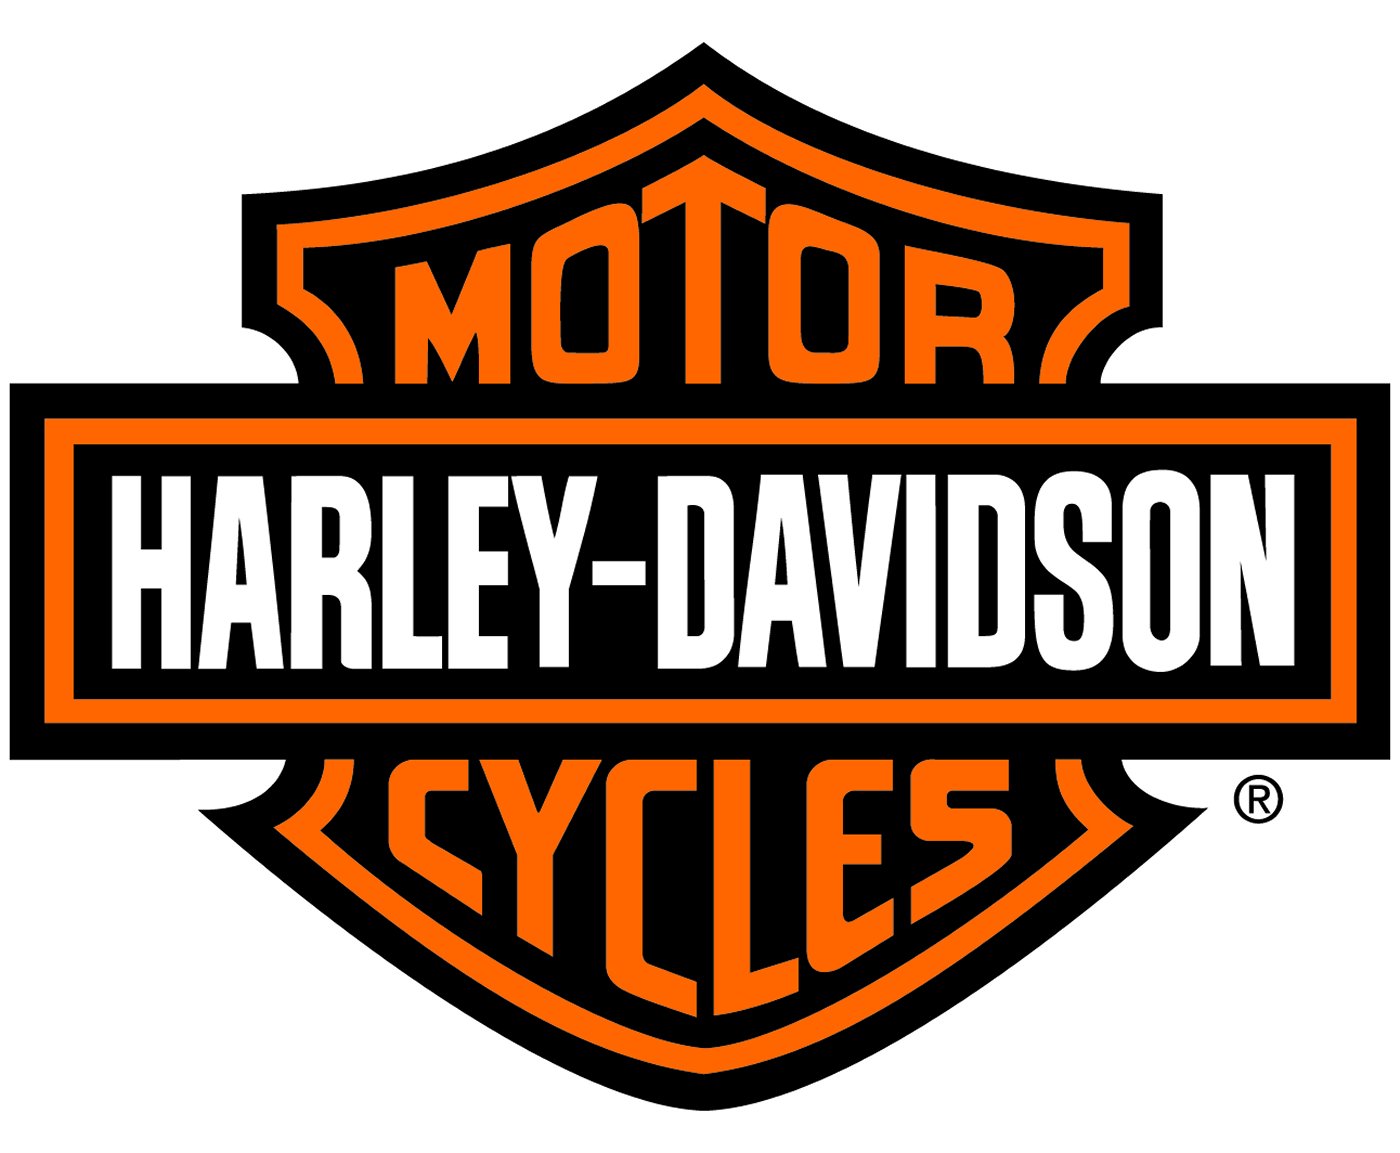  Logo  Logo  Wallpaper  Collection HARLEY  DEVIDSON LOGO  